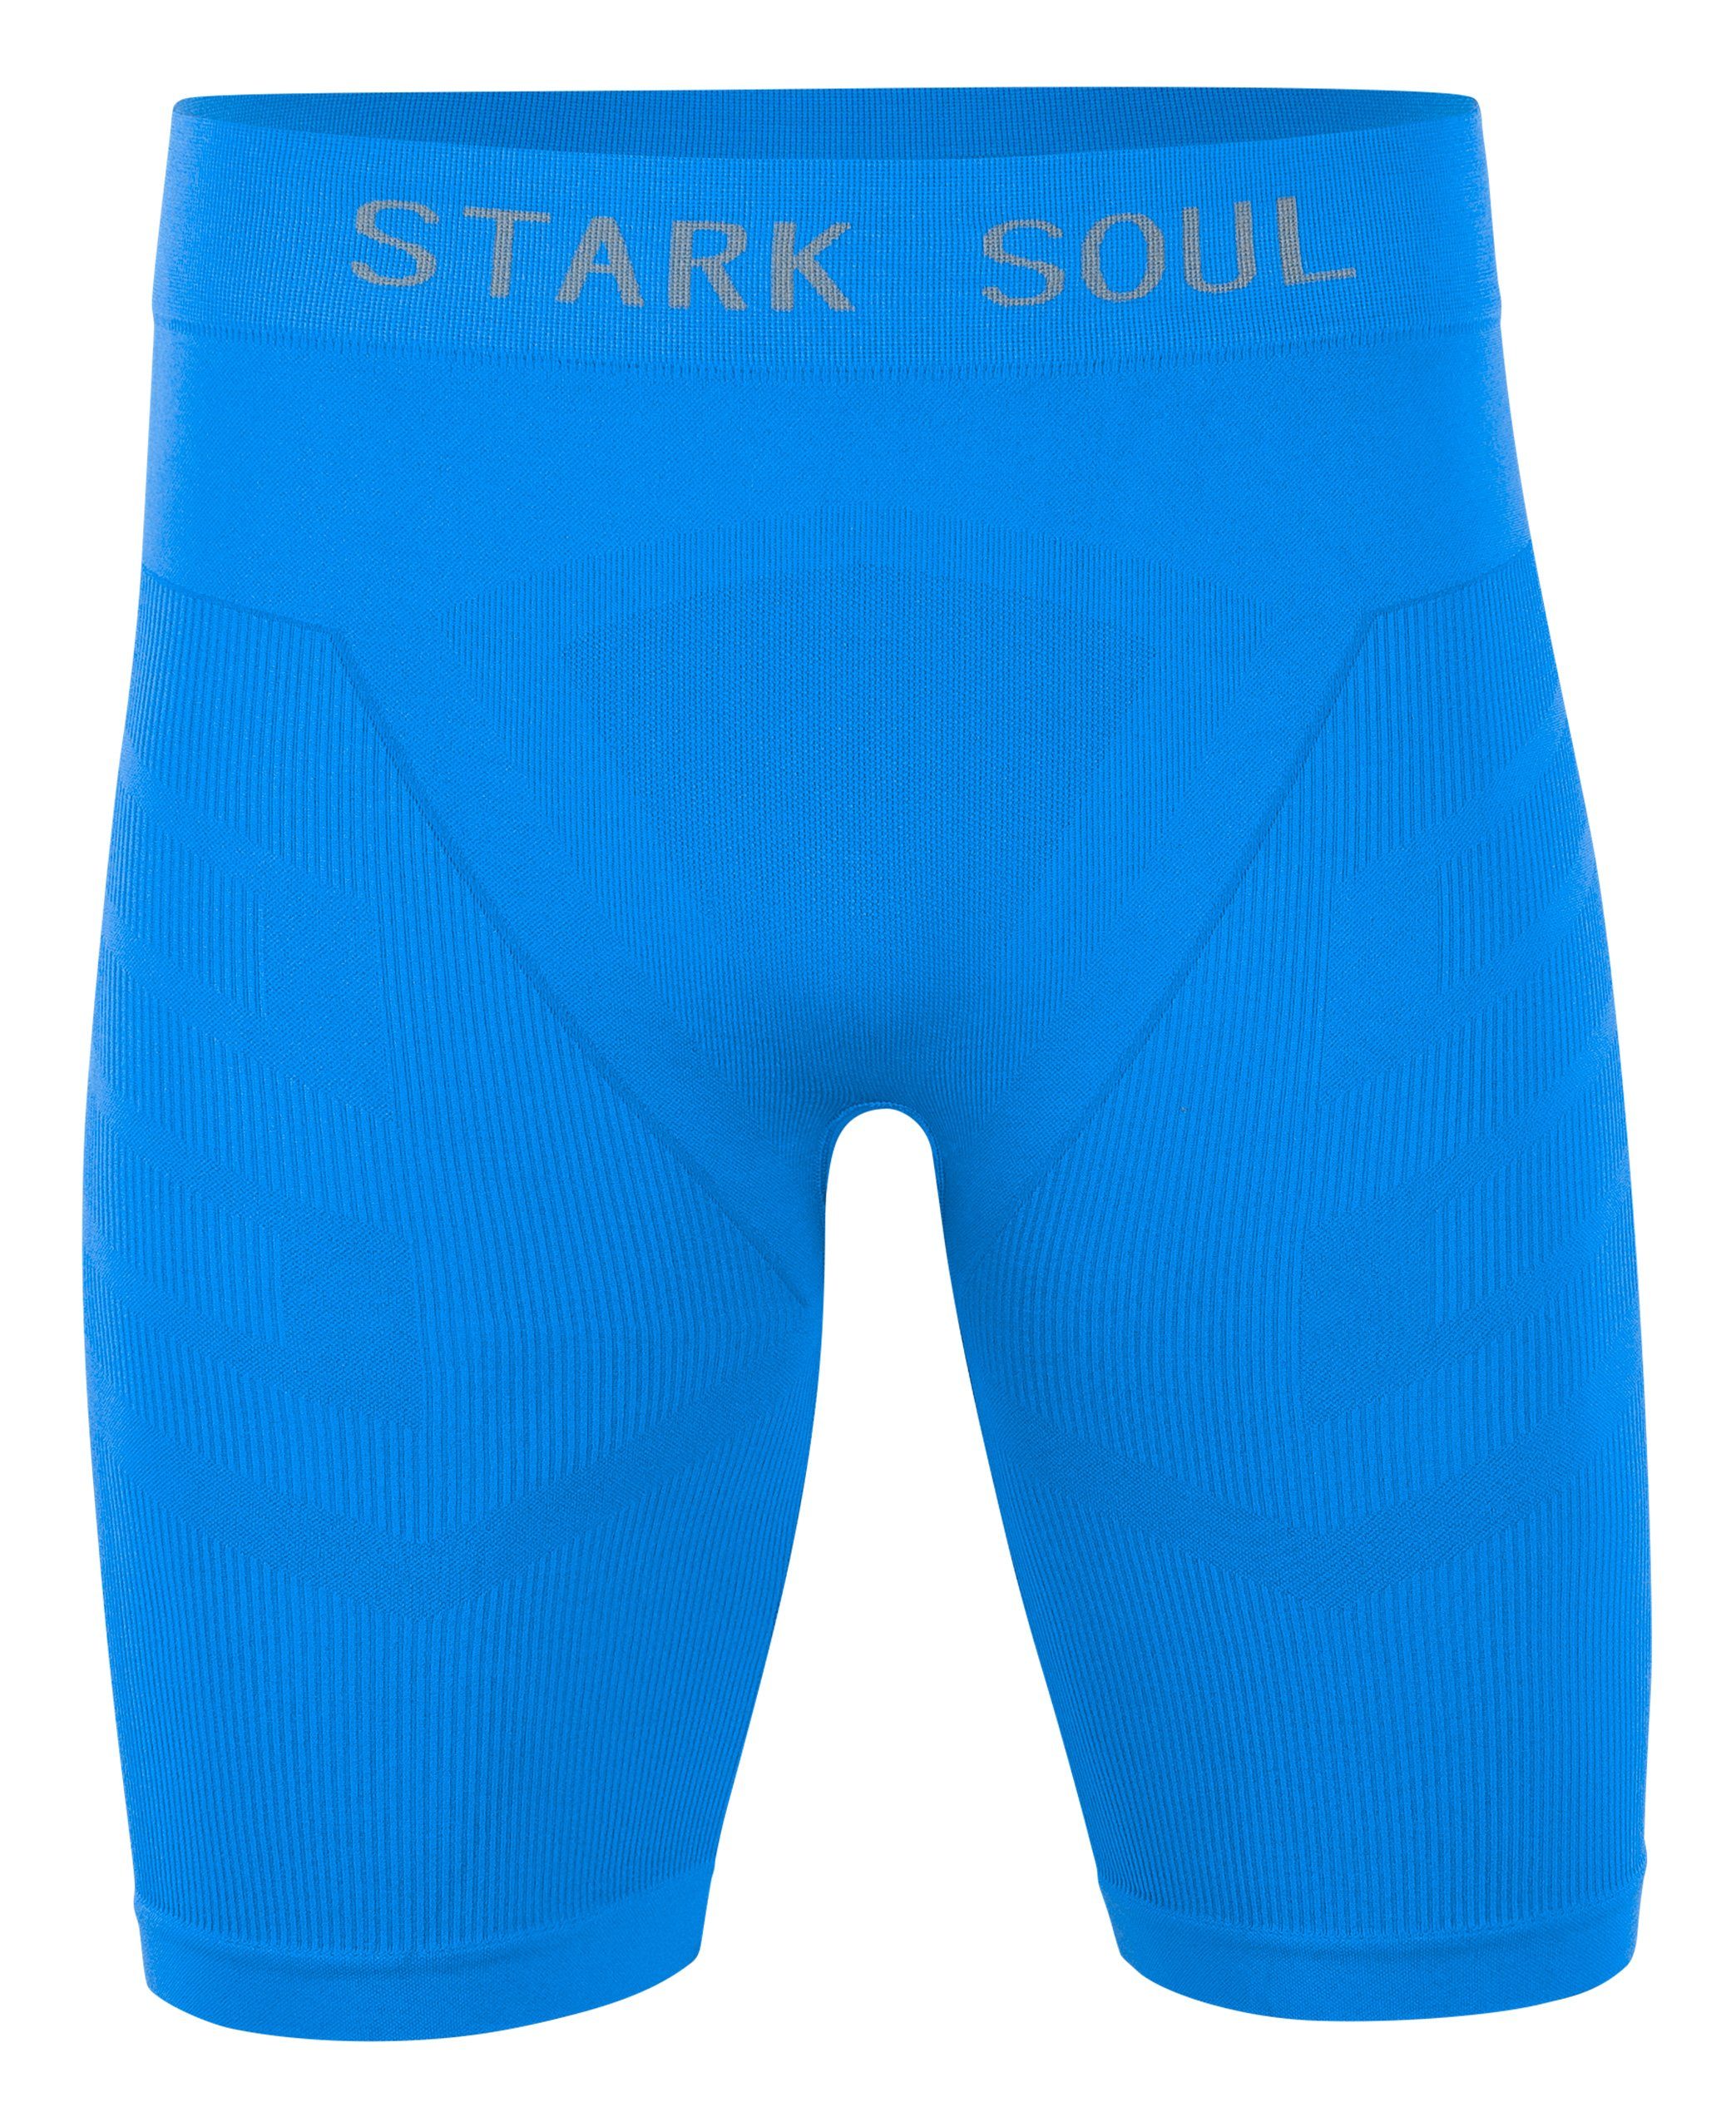 Stark Soul® Radlerhose Kurze - Blau WARM UP Seamless Unterziehtights 